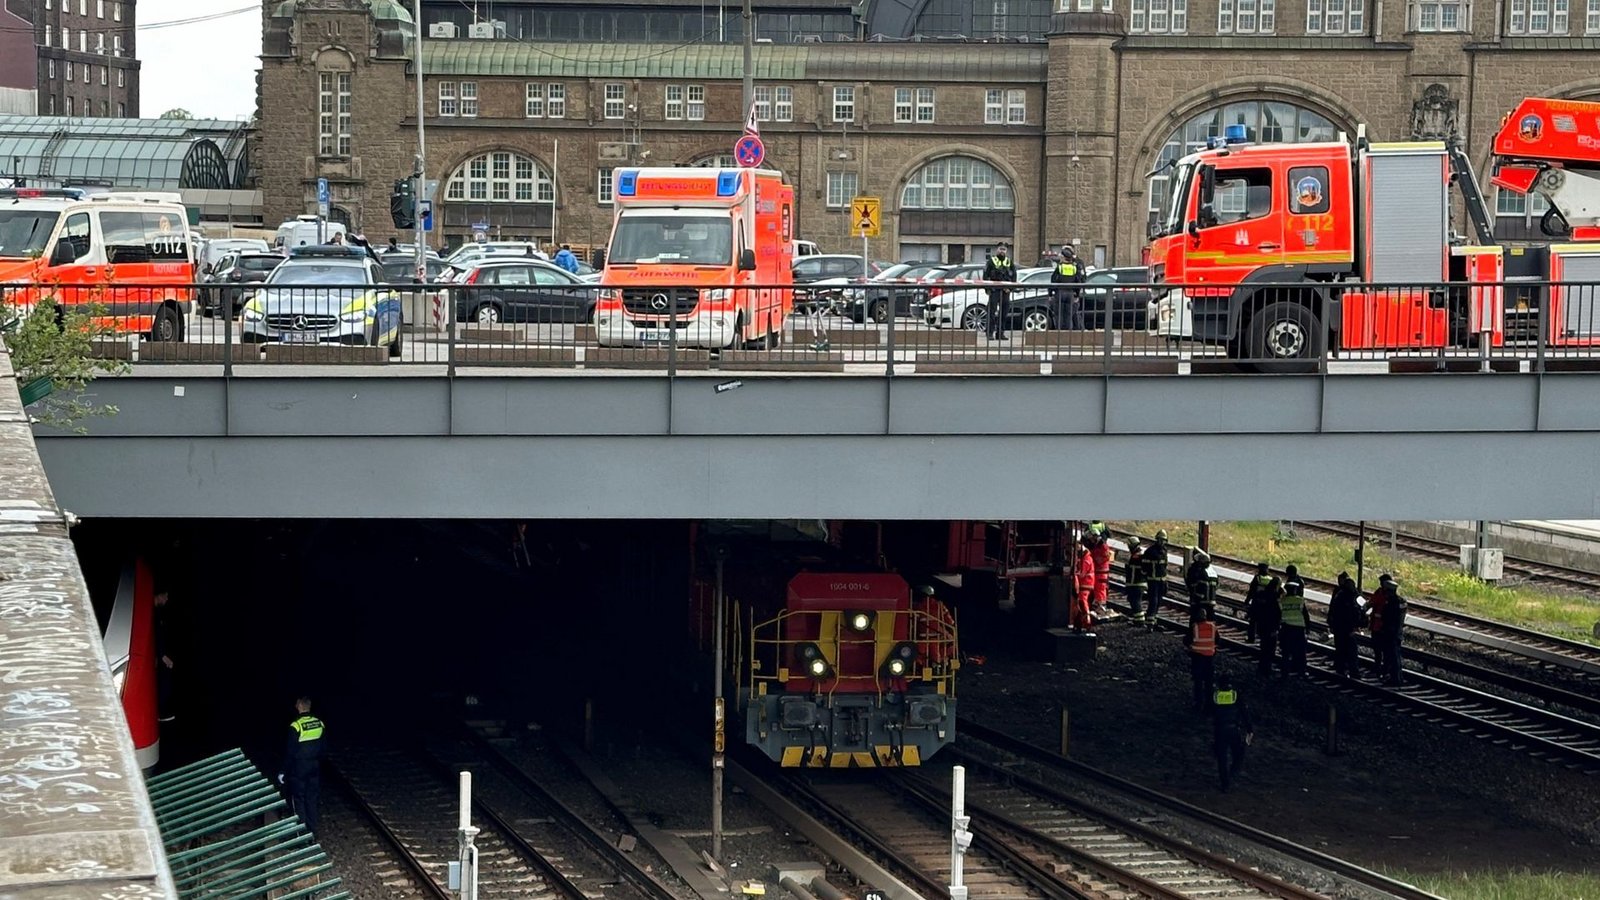 Am Hamburger Hauptbahnhof ist ein Bauzug entgleist. (Symbolbild)Foto: dpa/Steven Hutchings